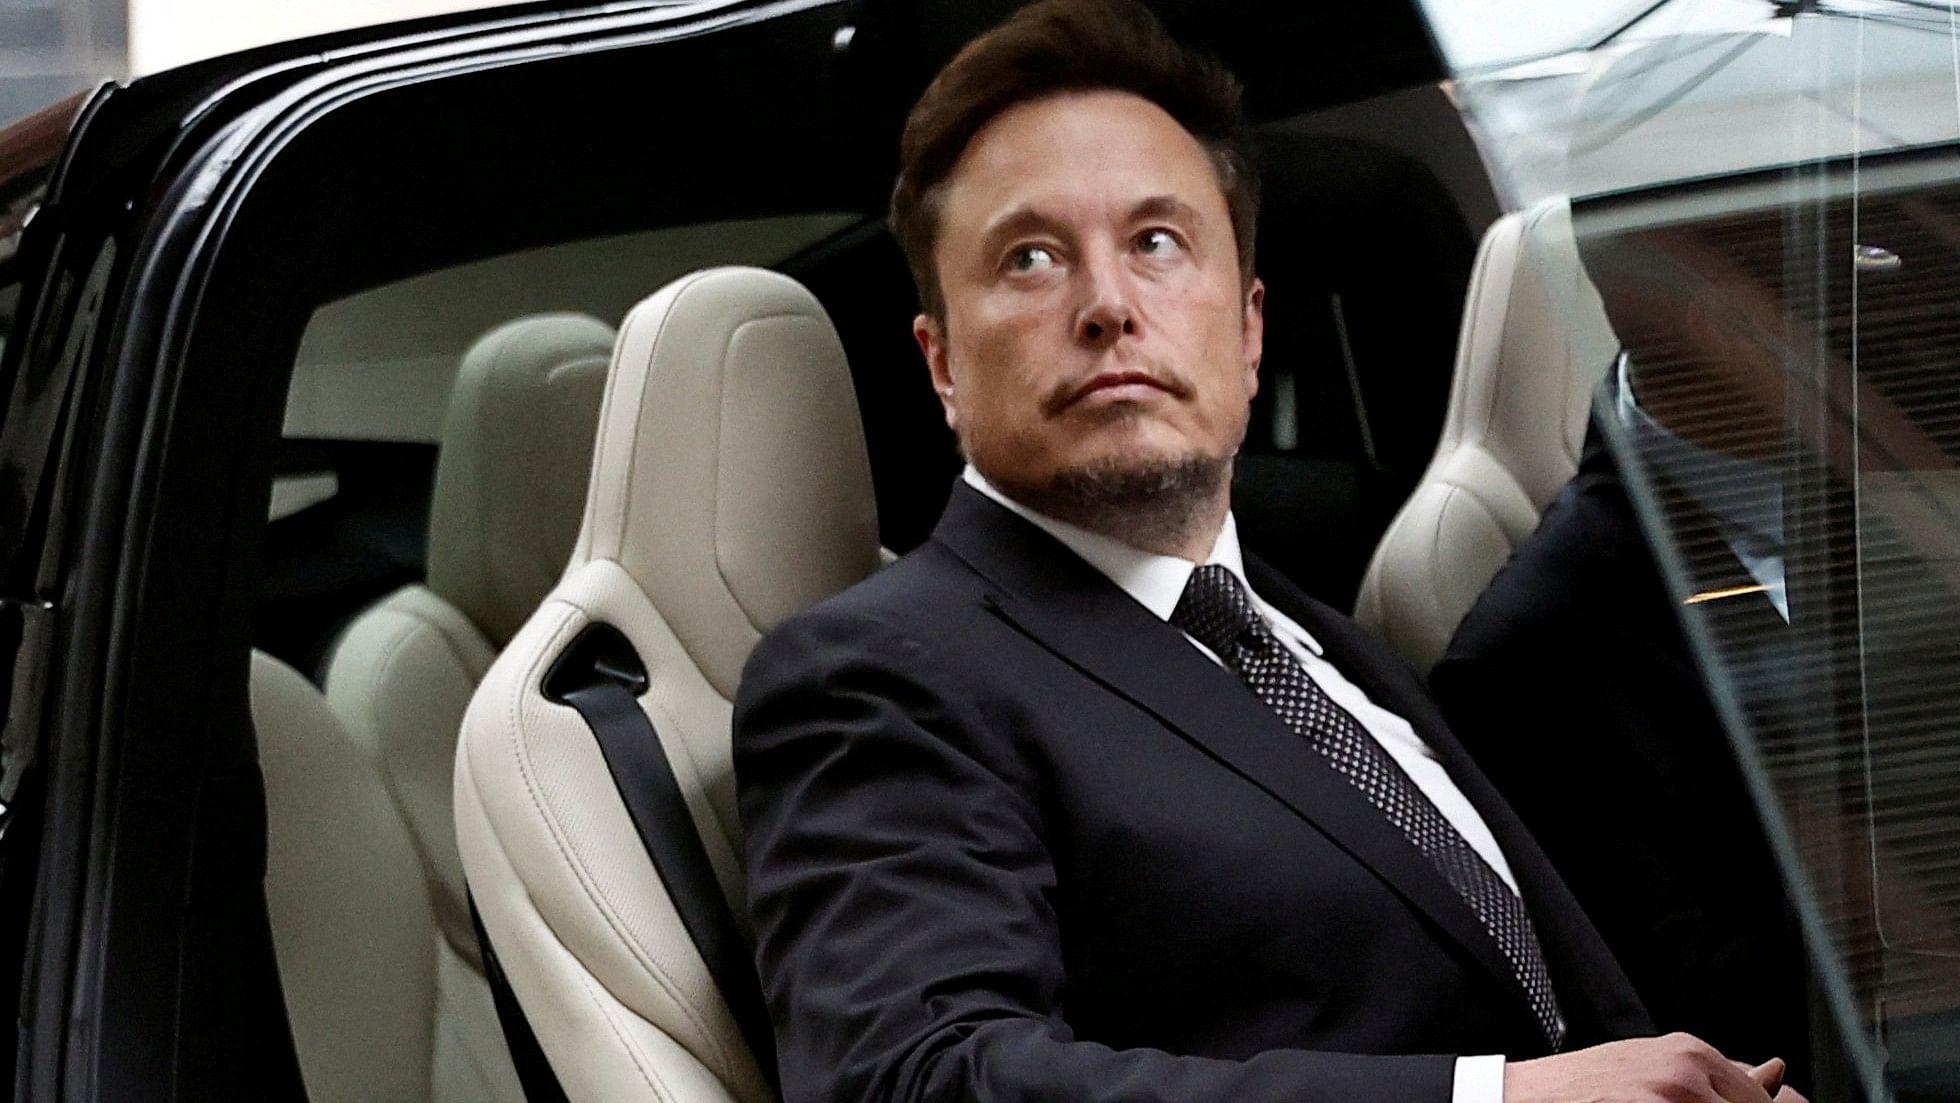 <div class="paragraphs"><p>Tesla Chief Executive Officer Elon Musk gets in a Tesla car.</p></div>